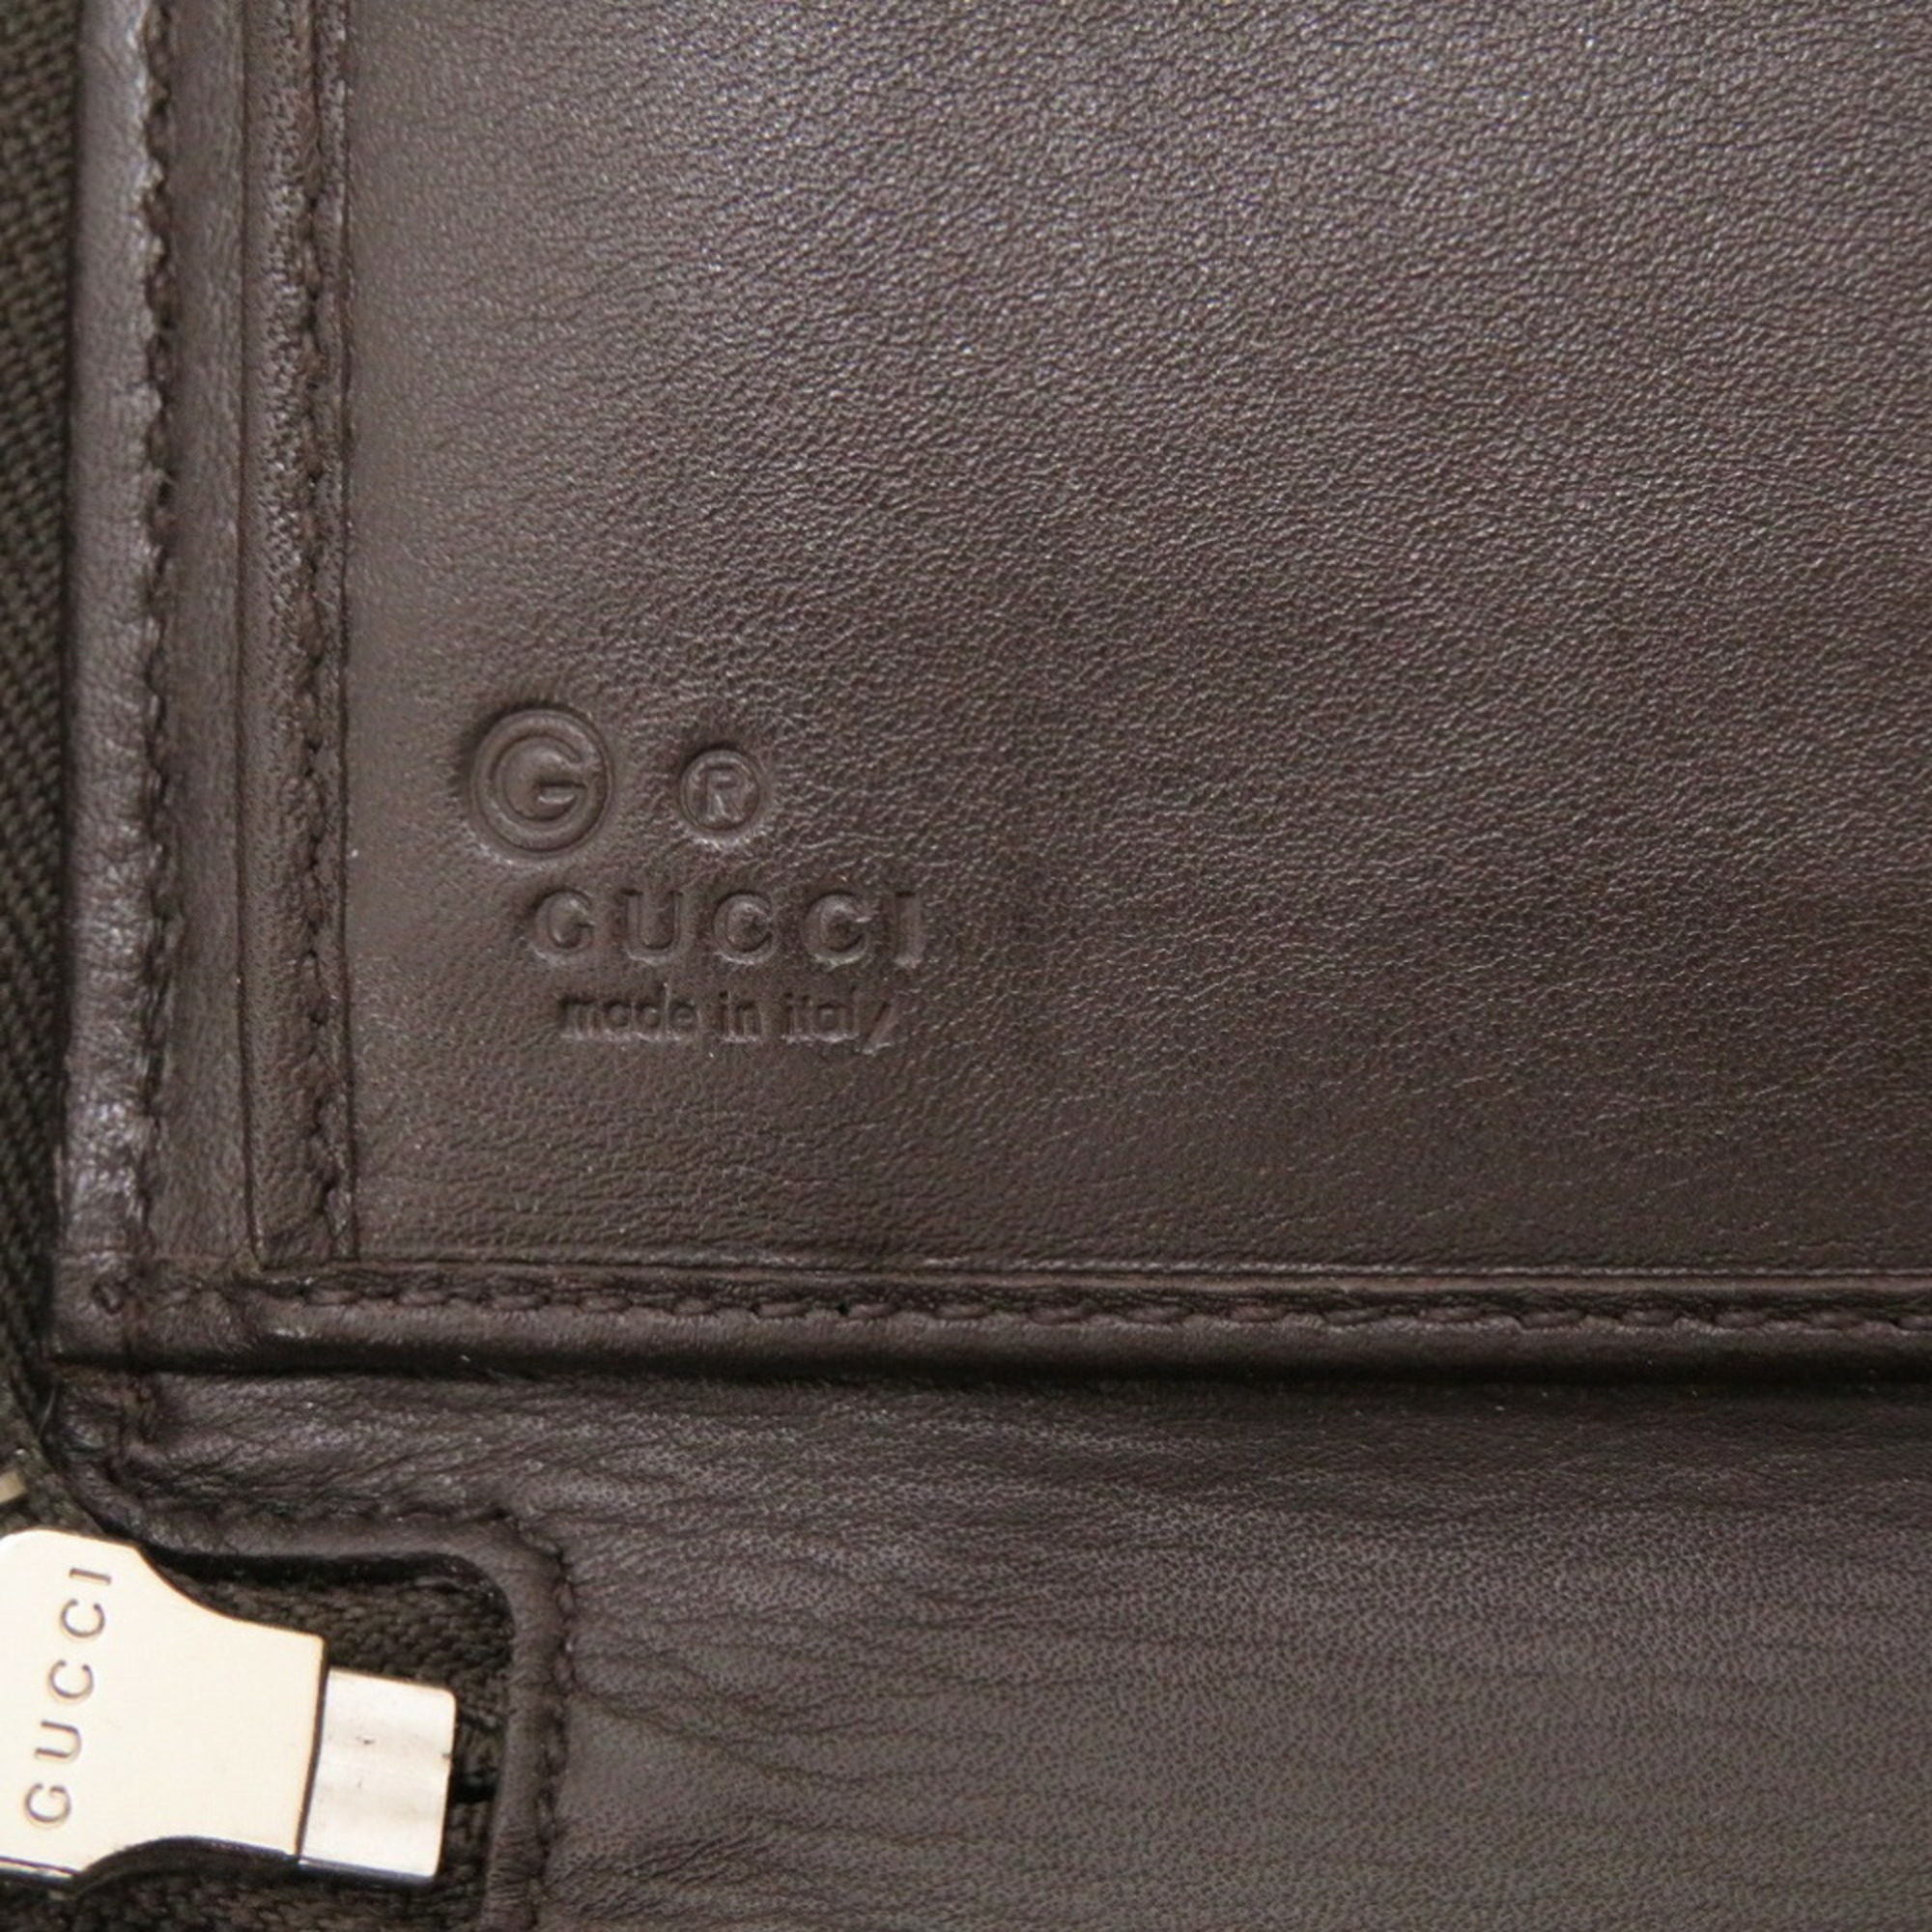 Gucci Micro Guccisima Brown 391465 Round Long Wallet Case